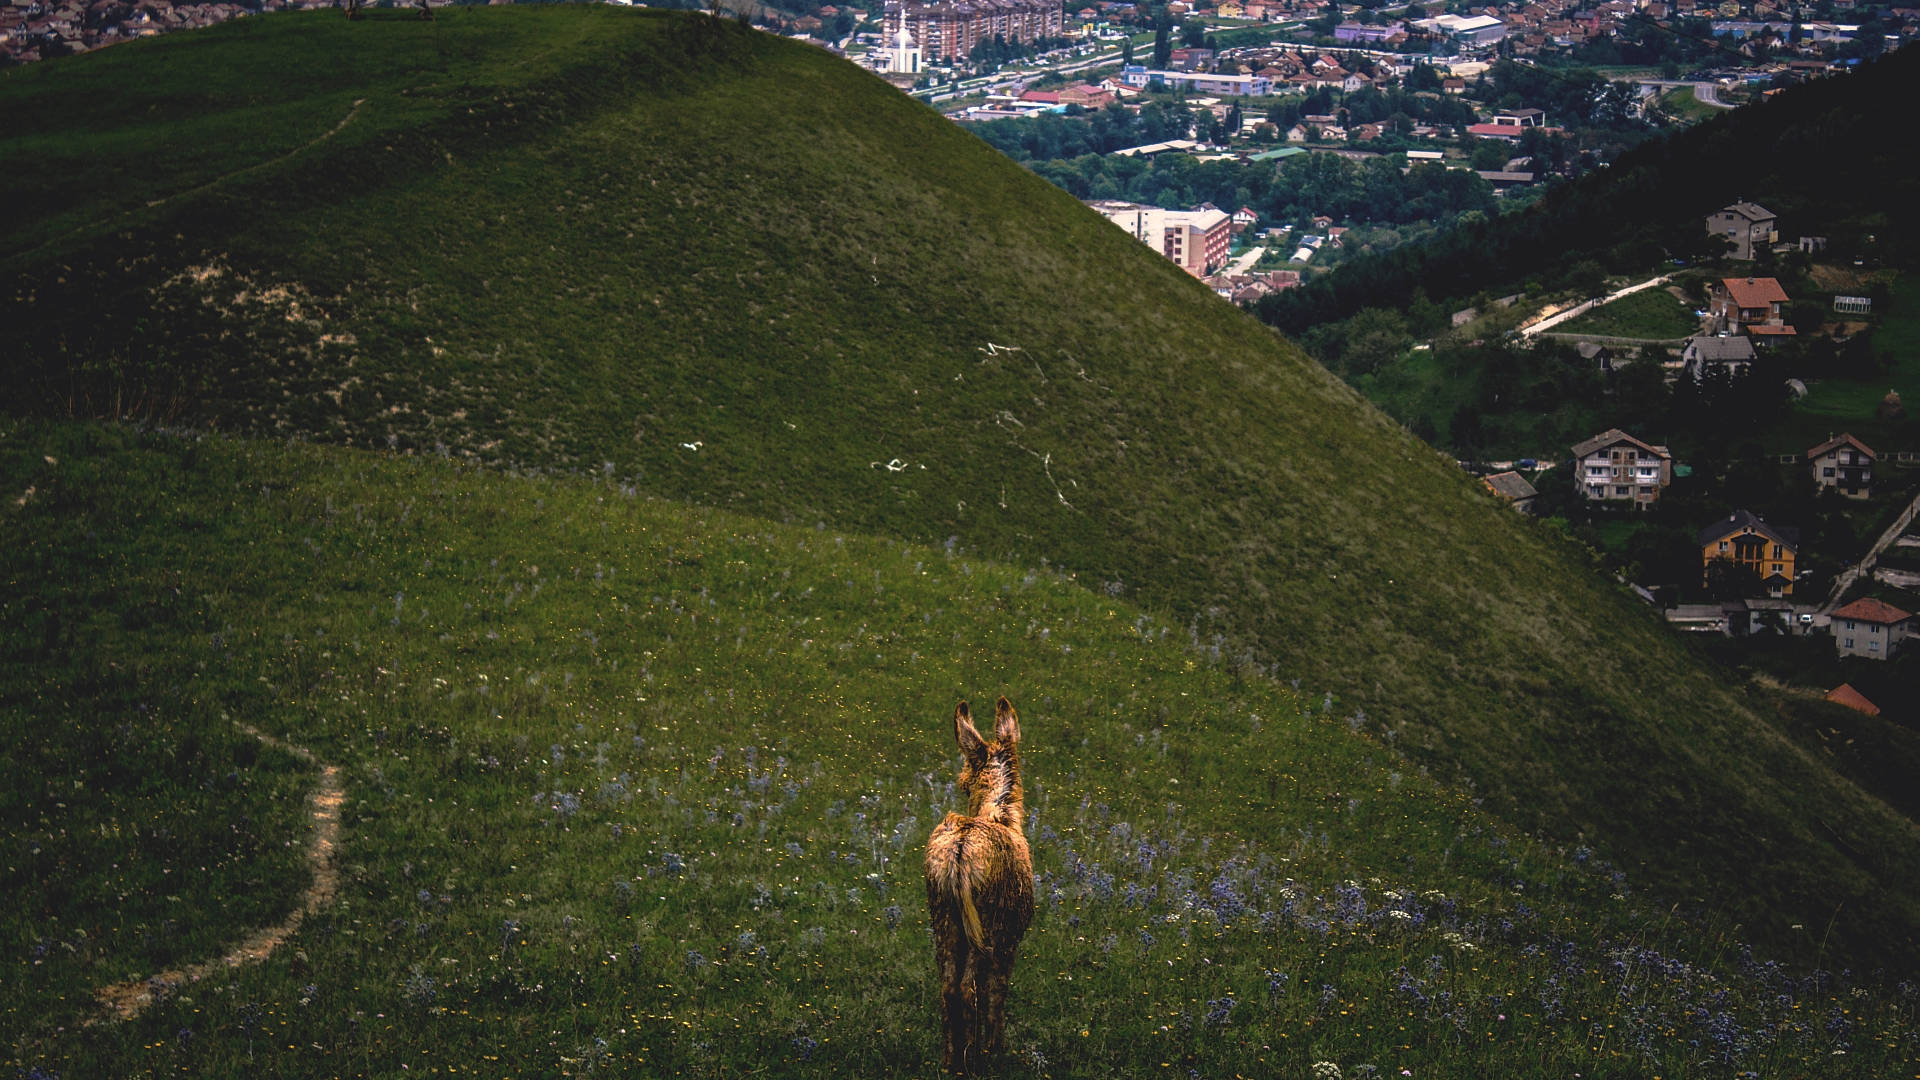 Brown Donkey On The Hillside